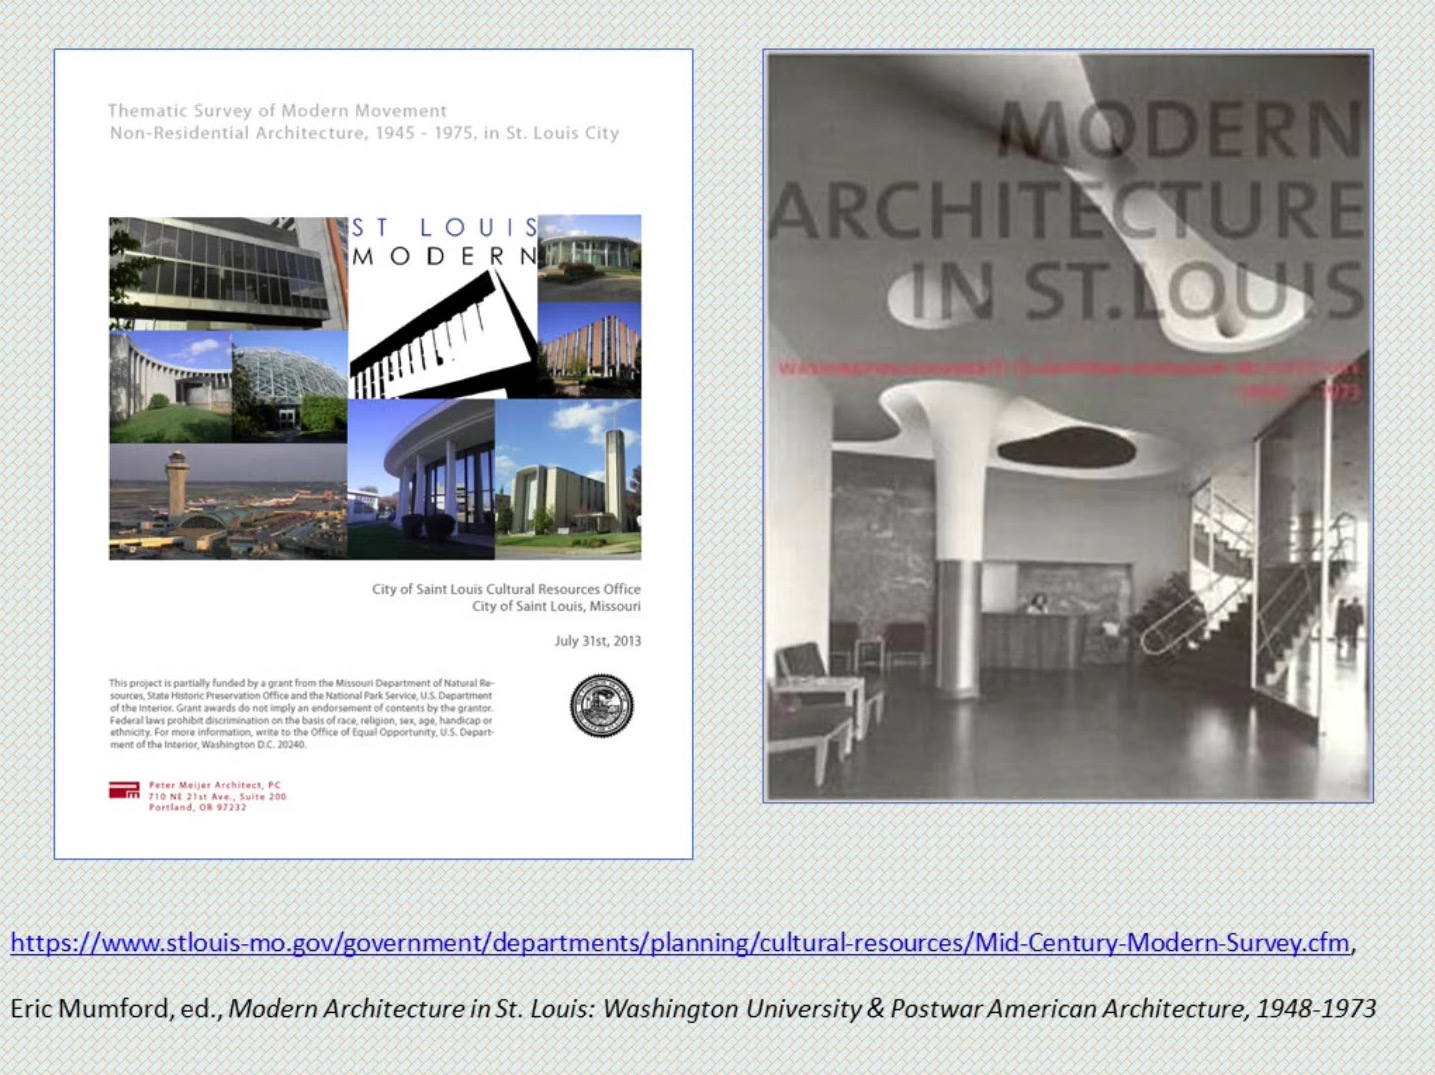 Conserving Modern Architecture Initiative